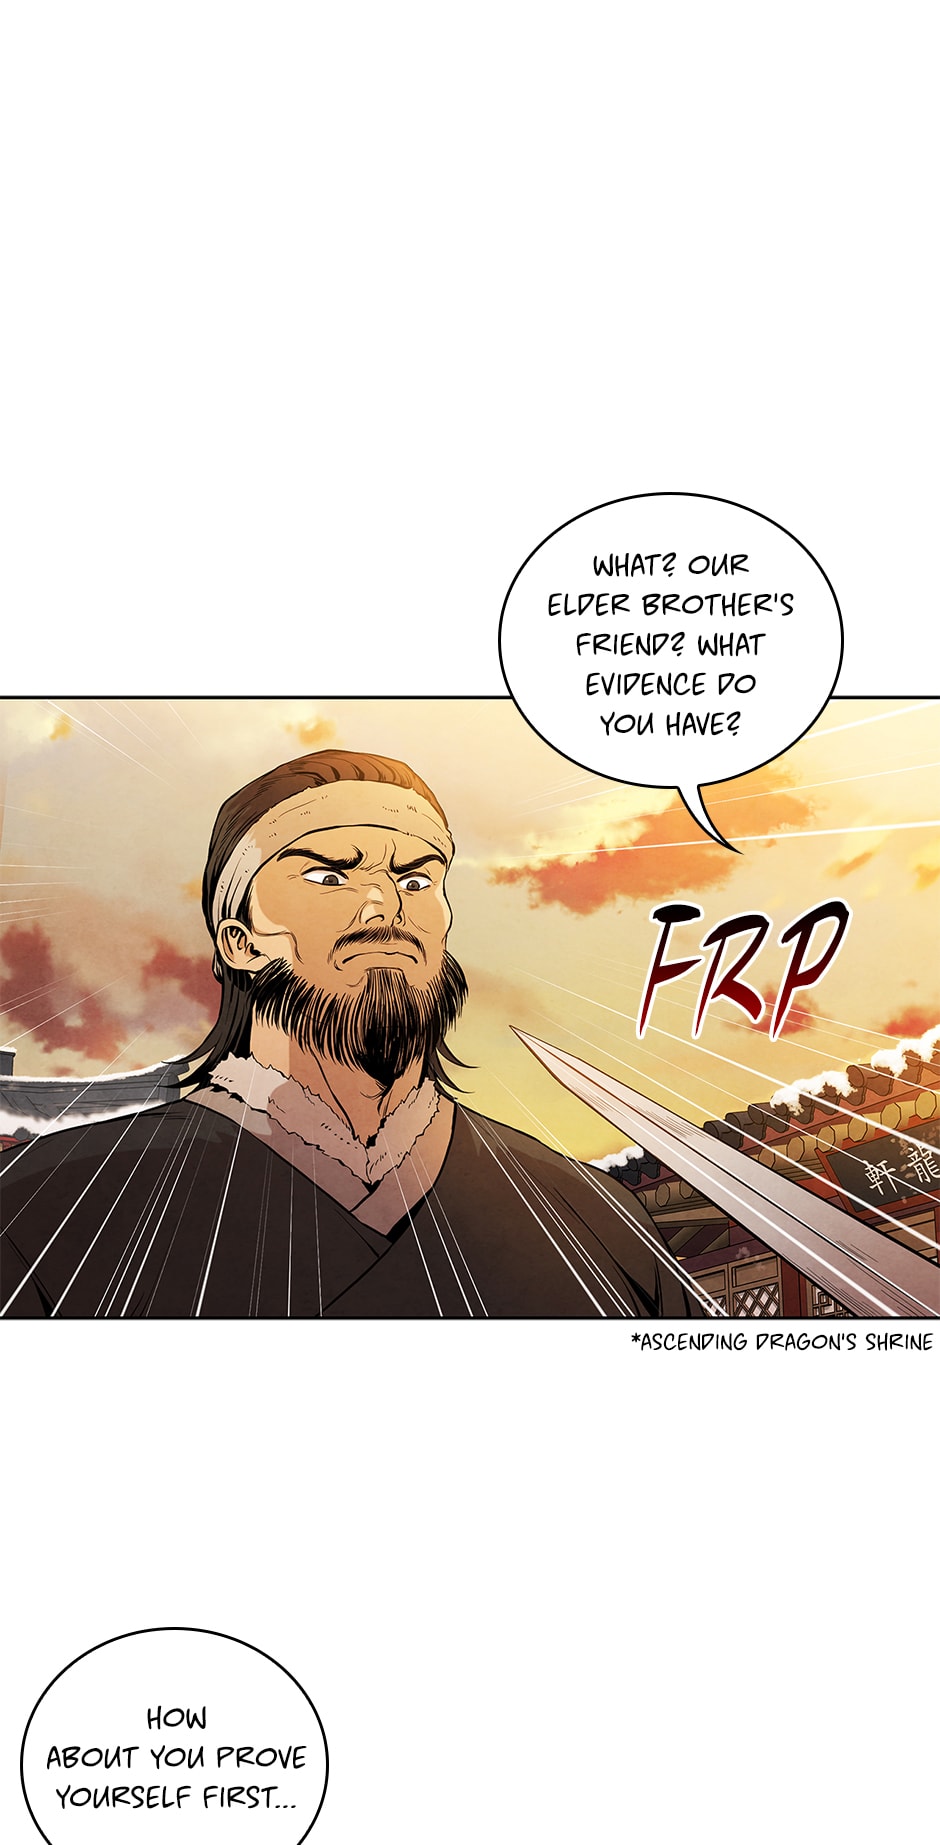 Read The Eldest Brother of Baekdu :: 3. A Fool's Facade | Tapas Comics